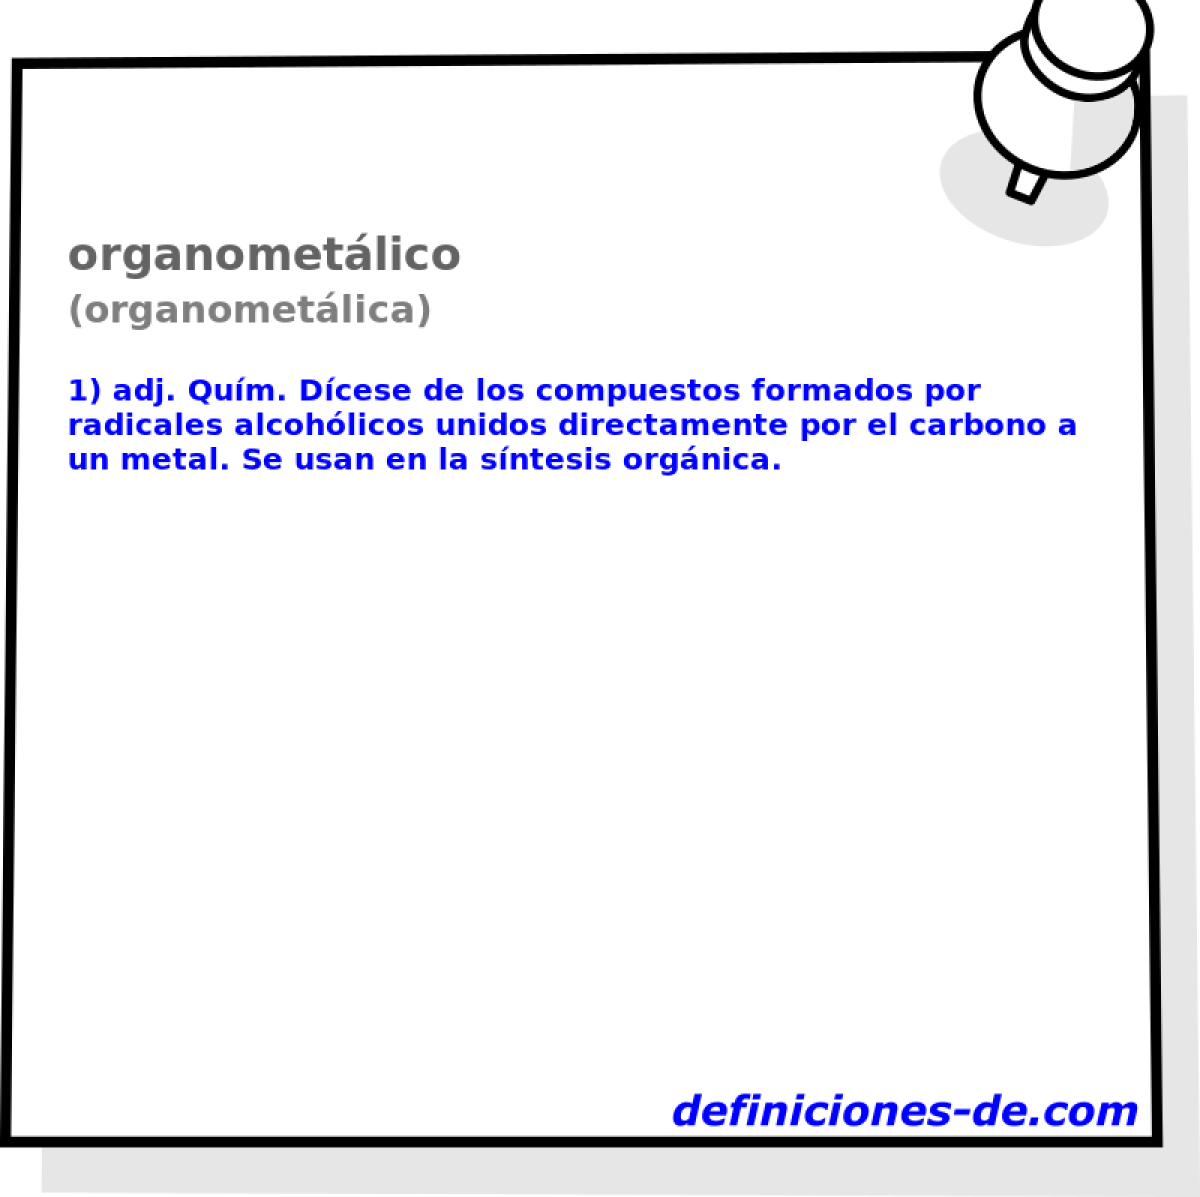 organometlico (organometlica)